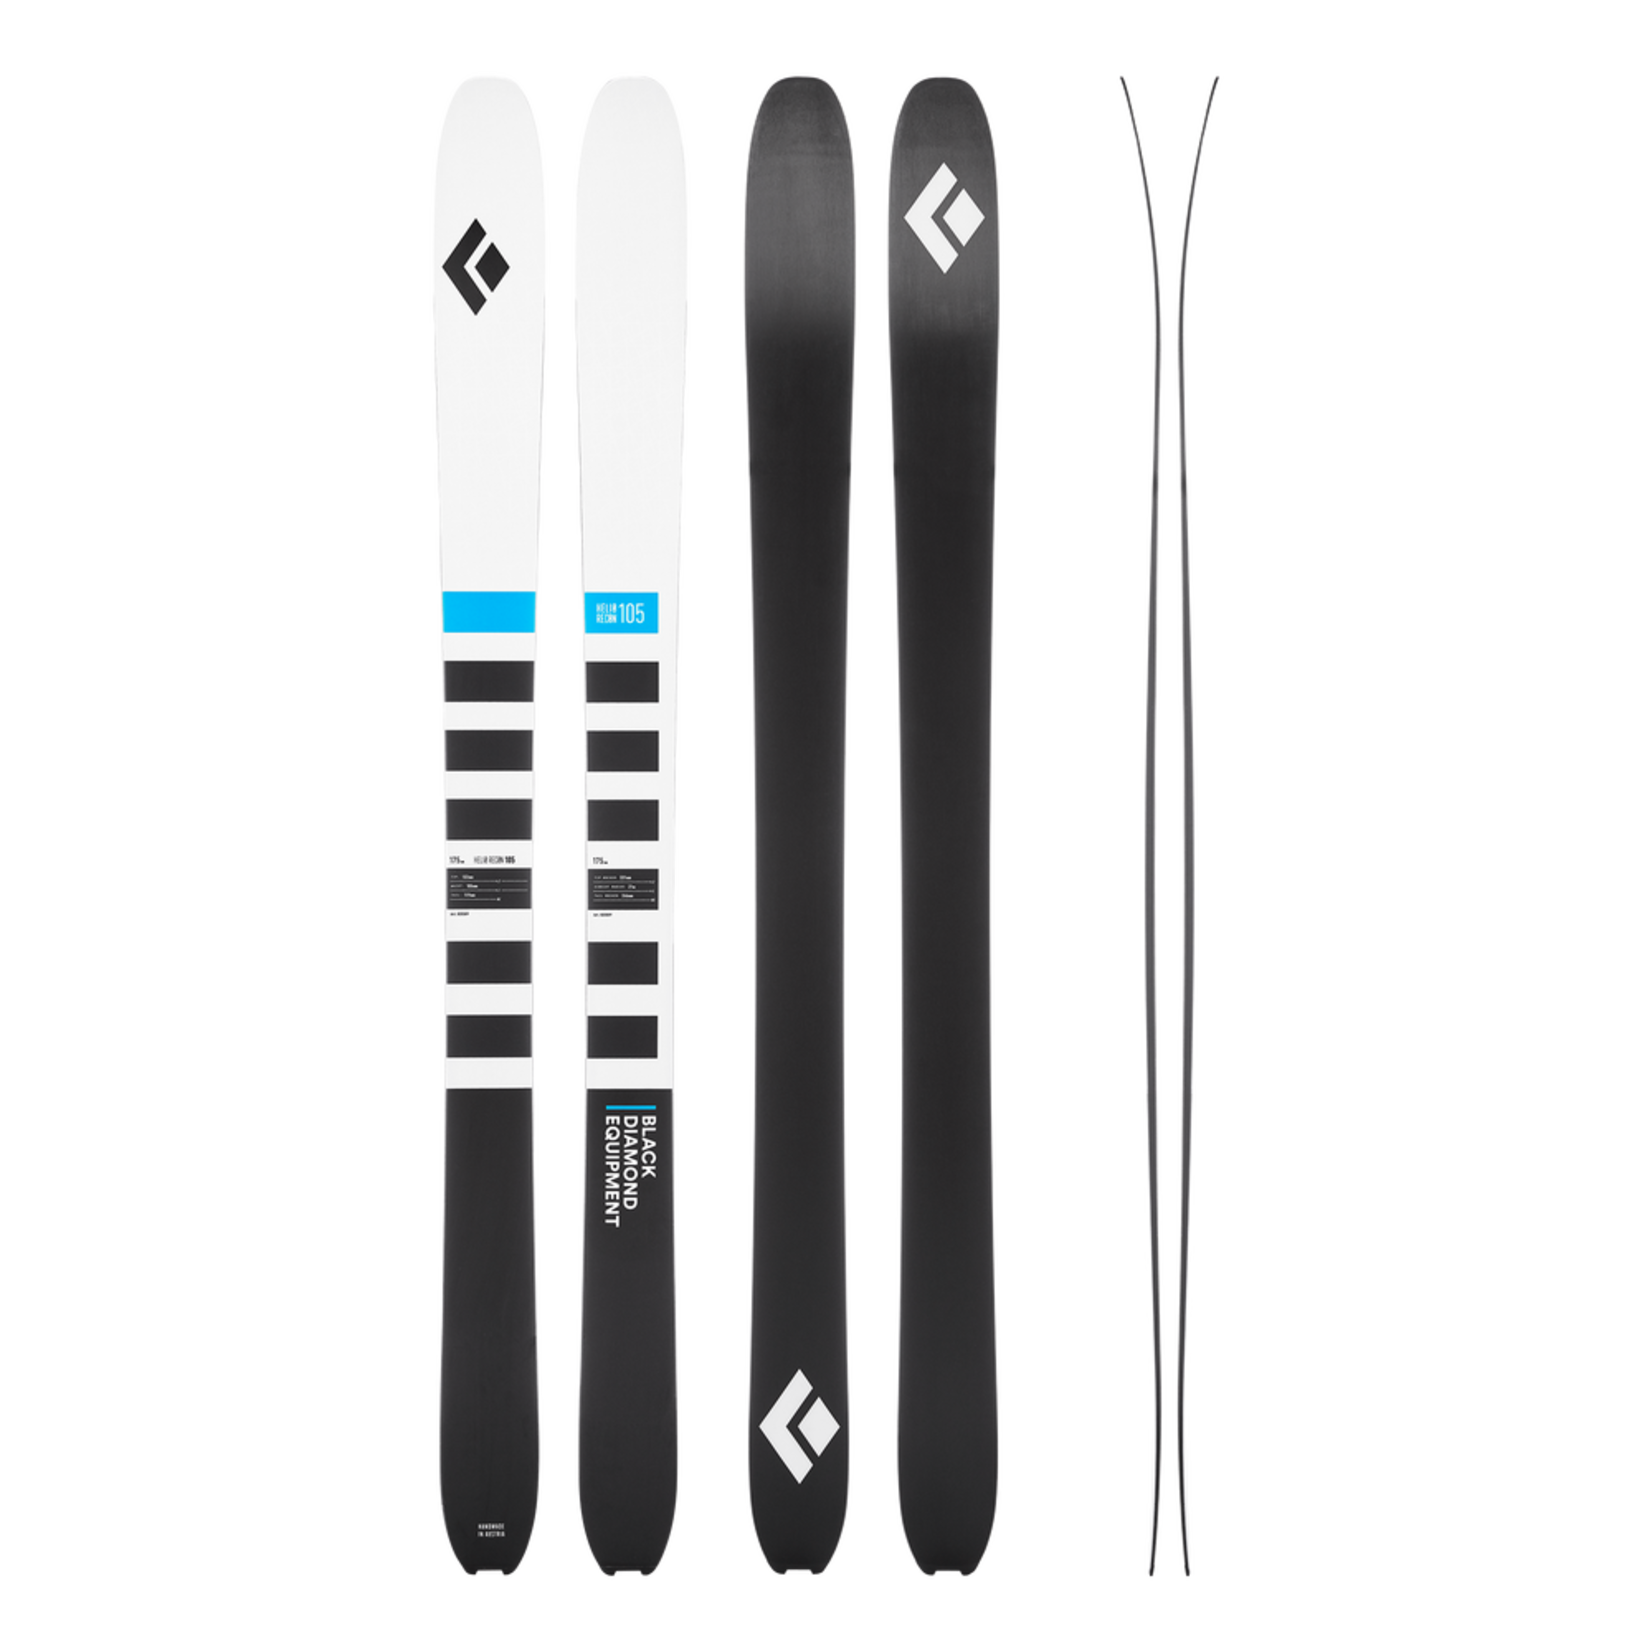 Black Diamond Helio Recon Skis, 105mm